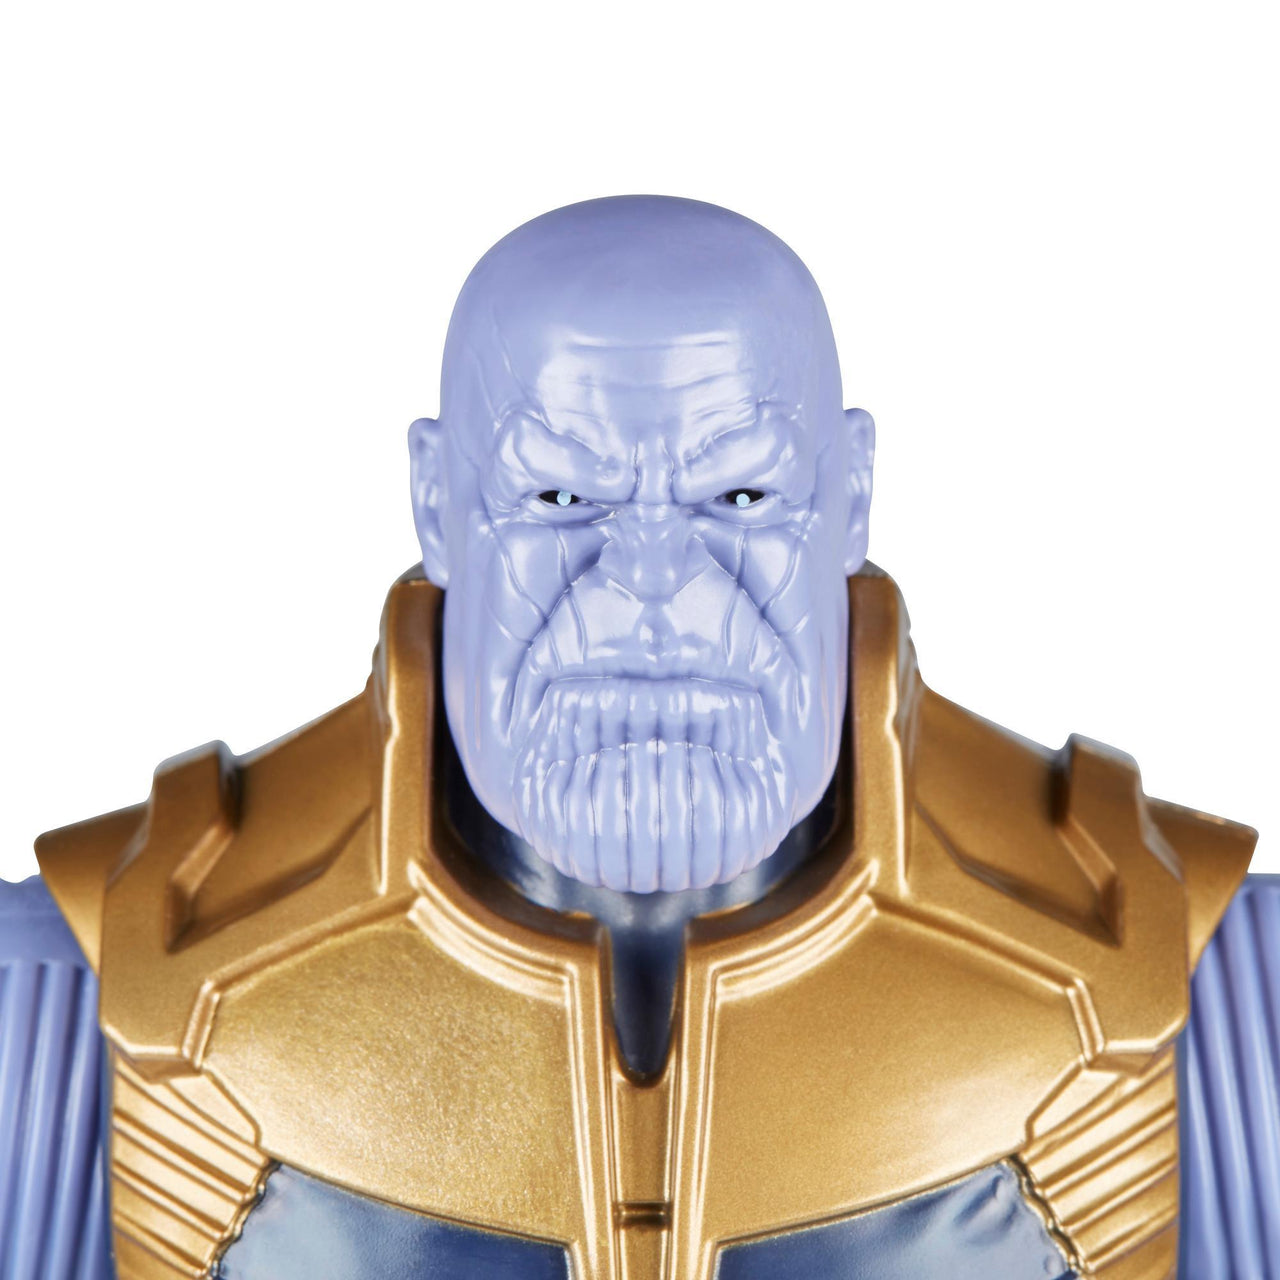 Marvel Infinity War Titan Hero Series Thanos with Titan Hero Power FX Port - Nerd Arena